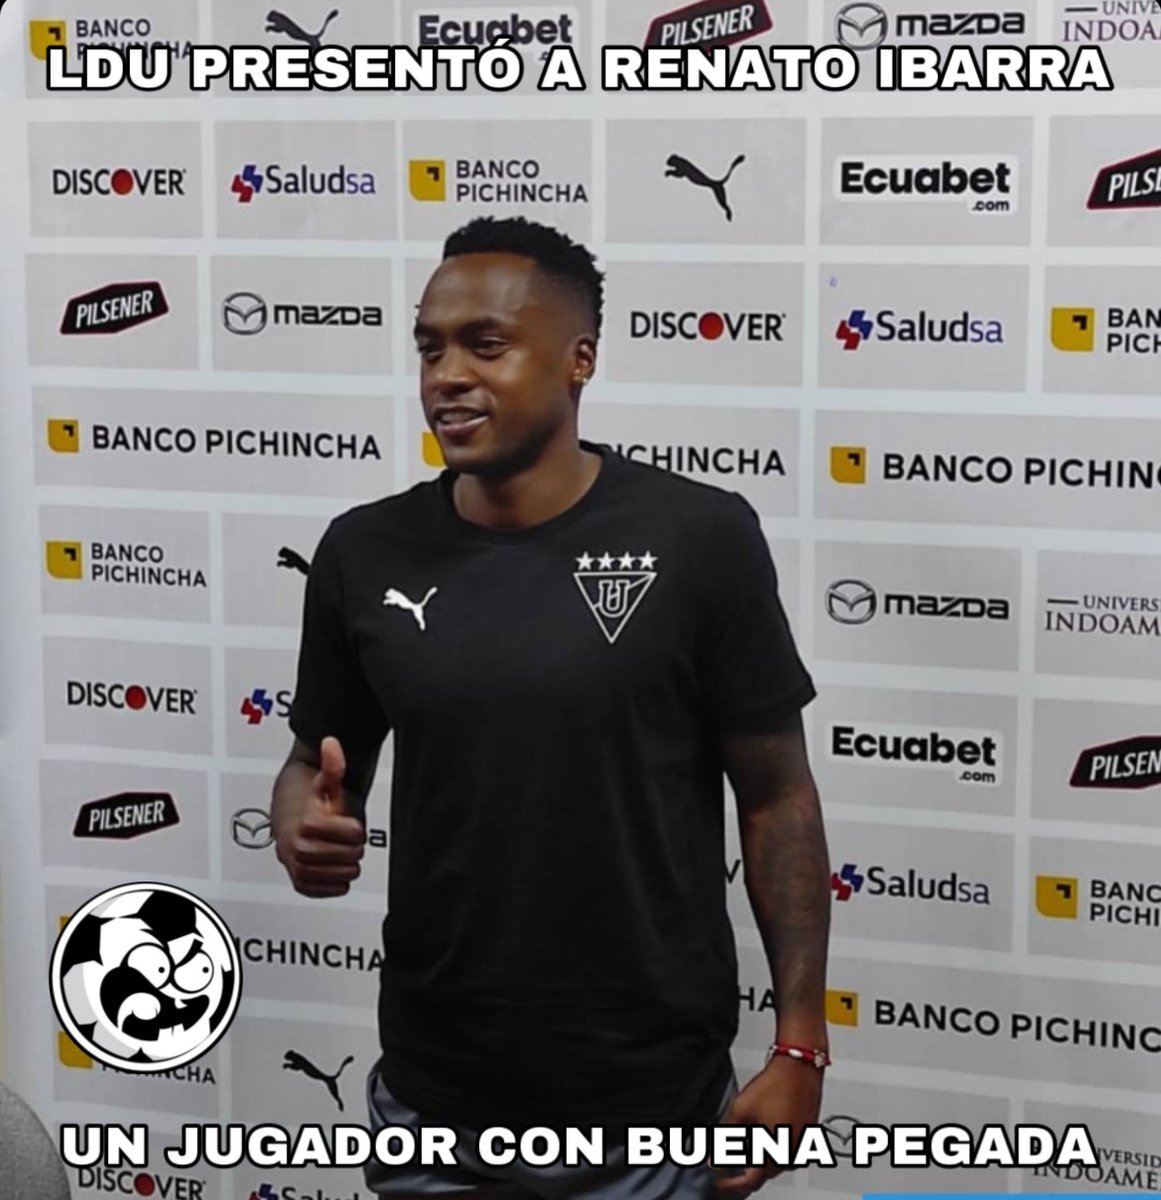 #RenatoIbarra nuevo jugador de #LDU

[instagram.com/futerweb]